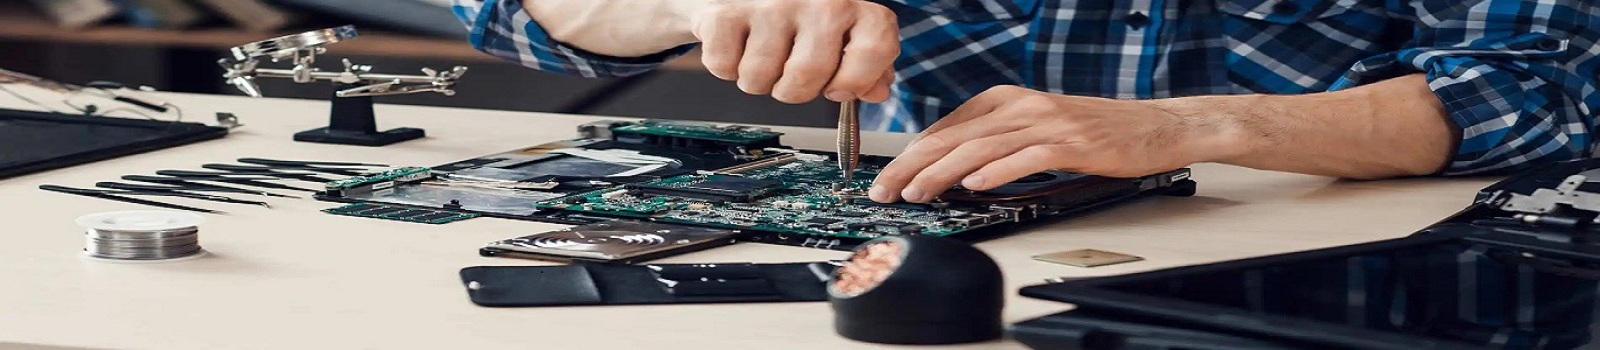 Advanced Laptop Chip Level Repairing Courses